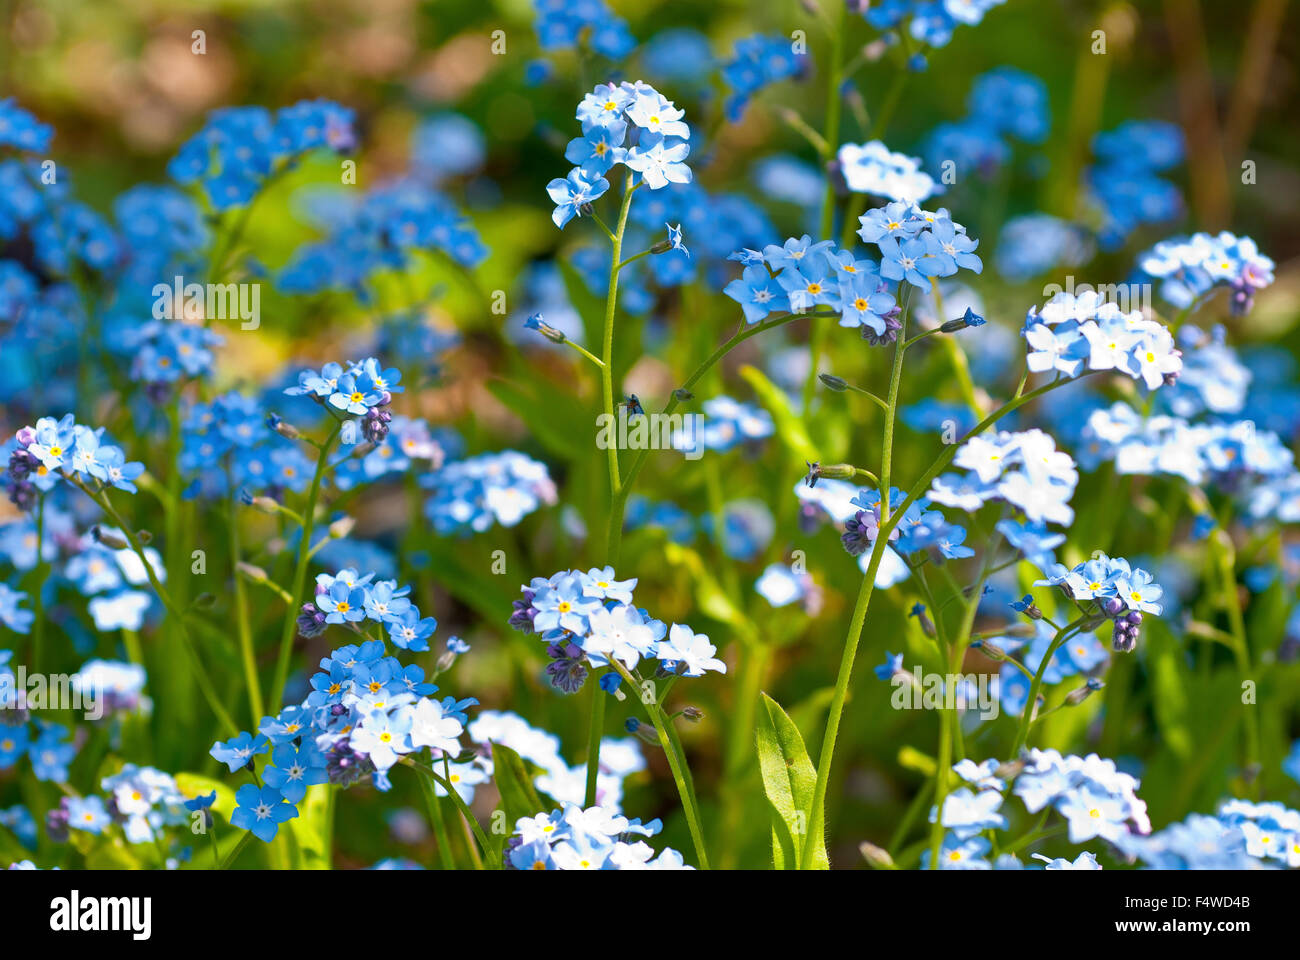 Flowering Forget-me-not (Myosotis sp.) in sunlight, Lower Saxony, Germany Stock Photo